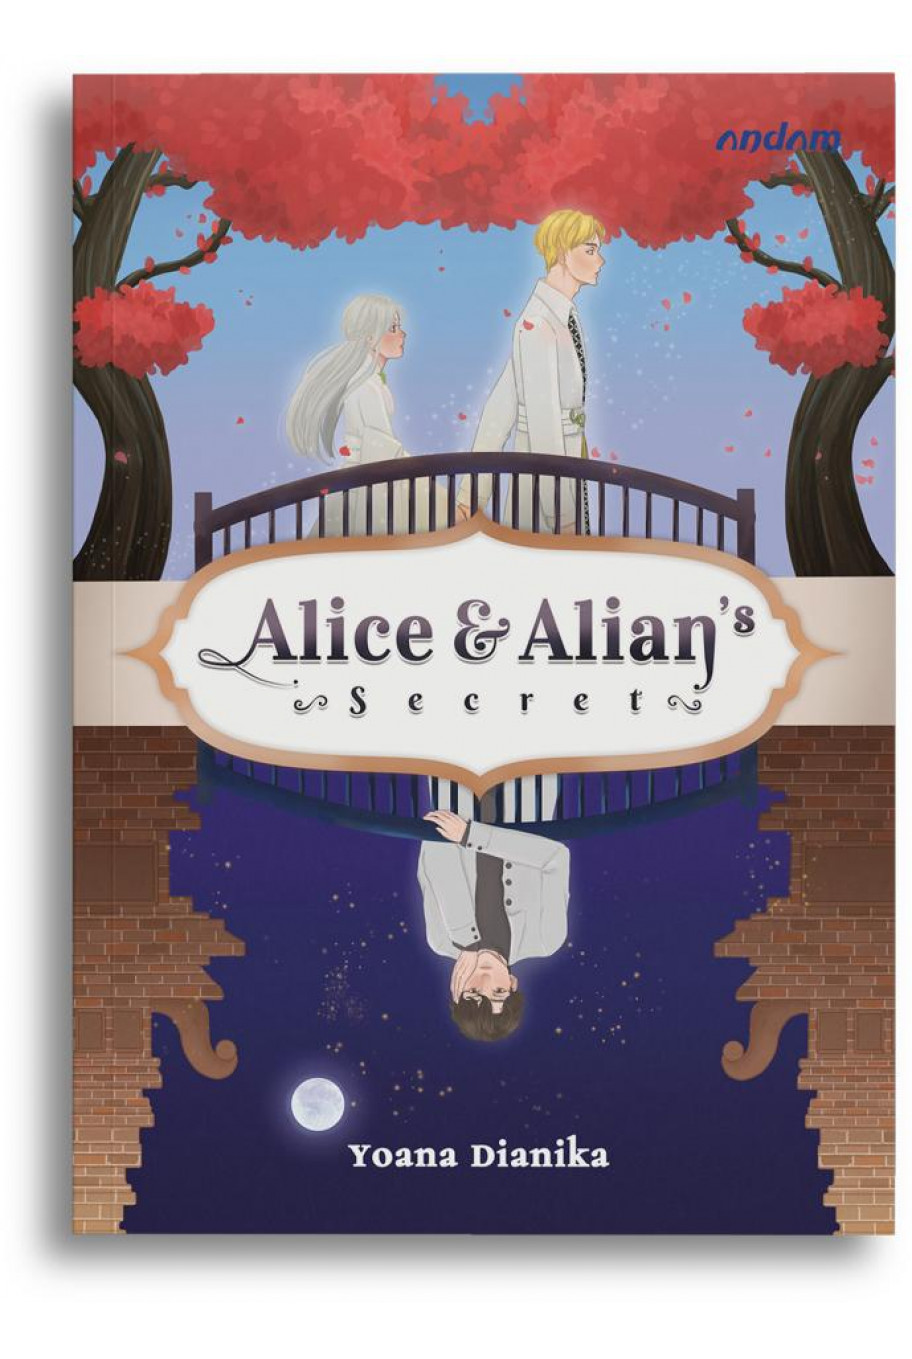 Alice & Alian's secret